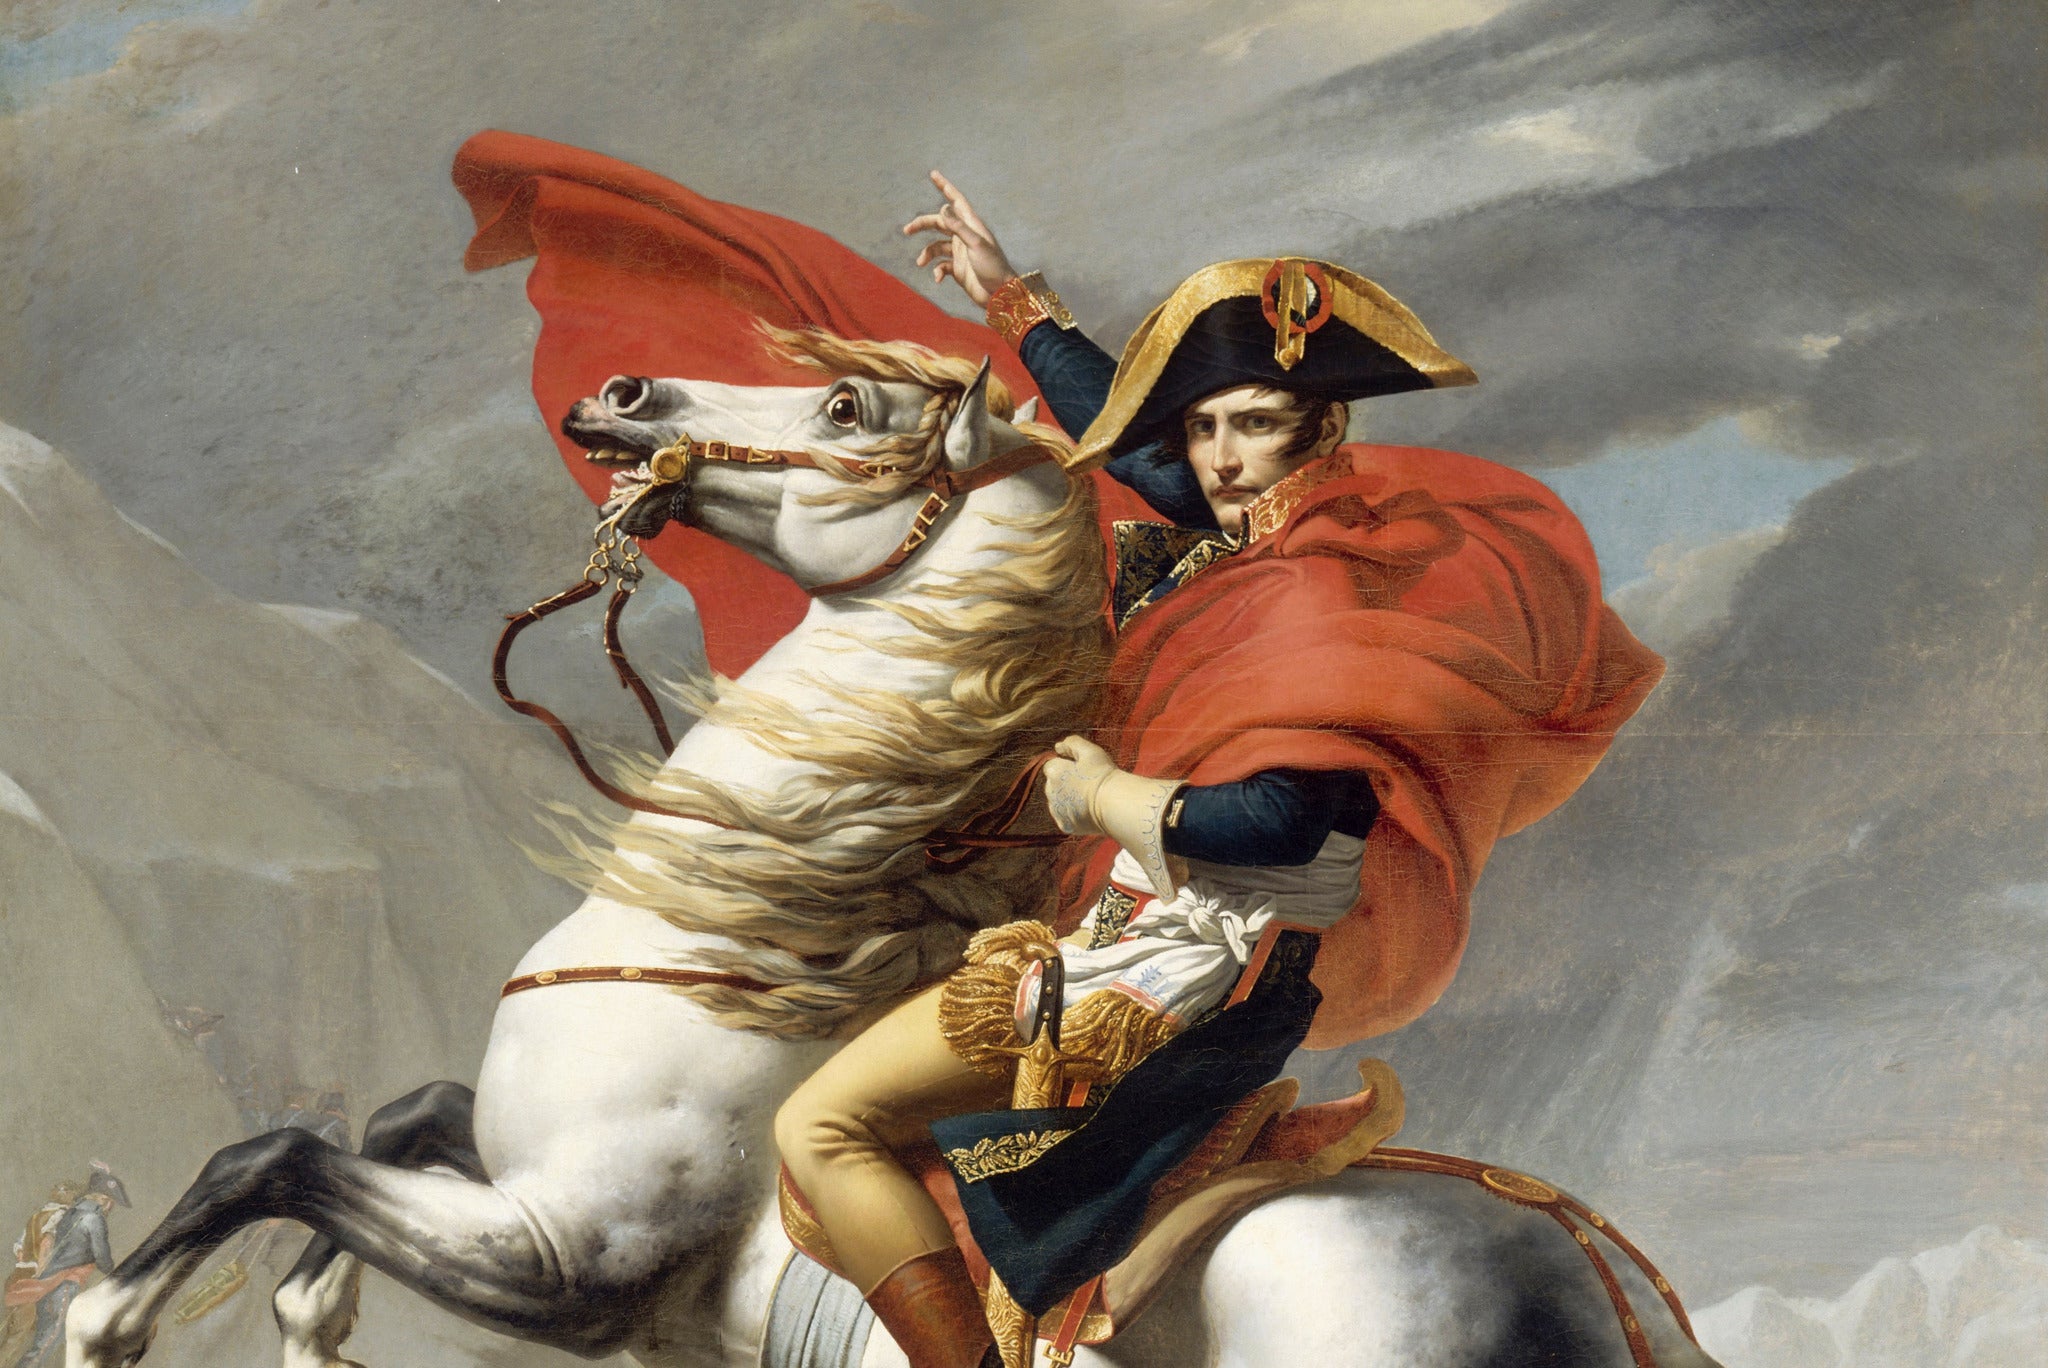 Napoleon Bonaparte wanted to invade Britain